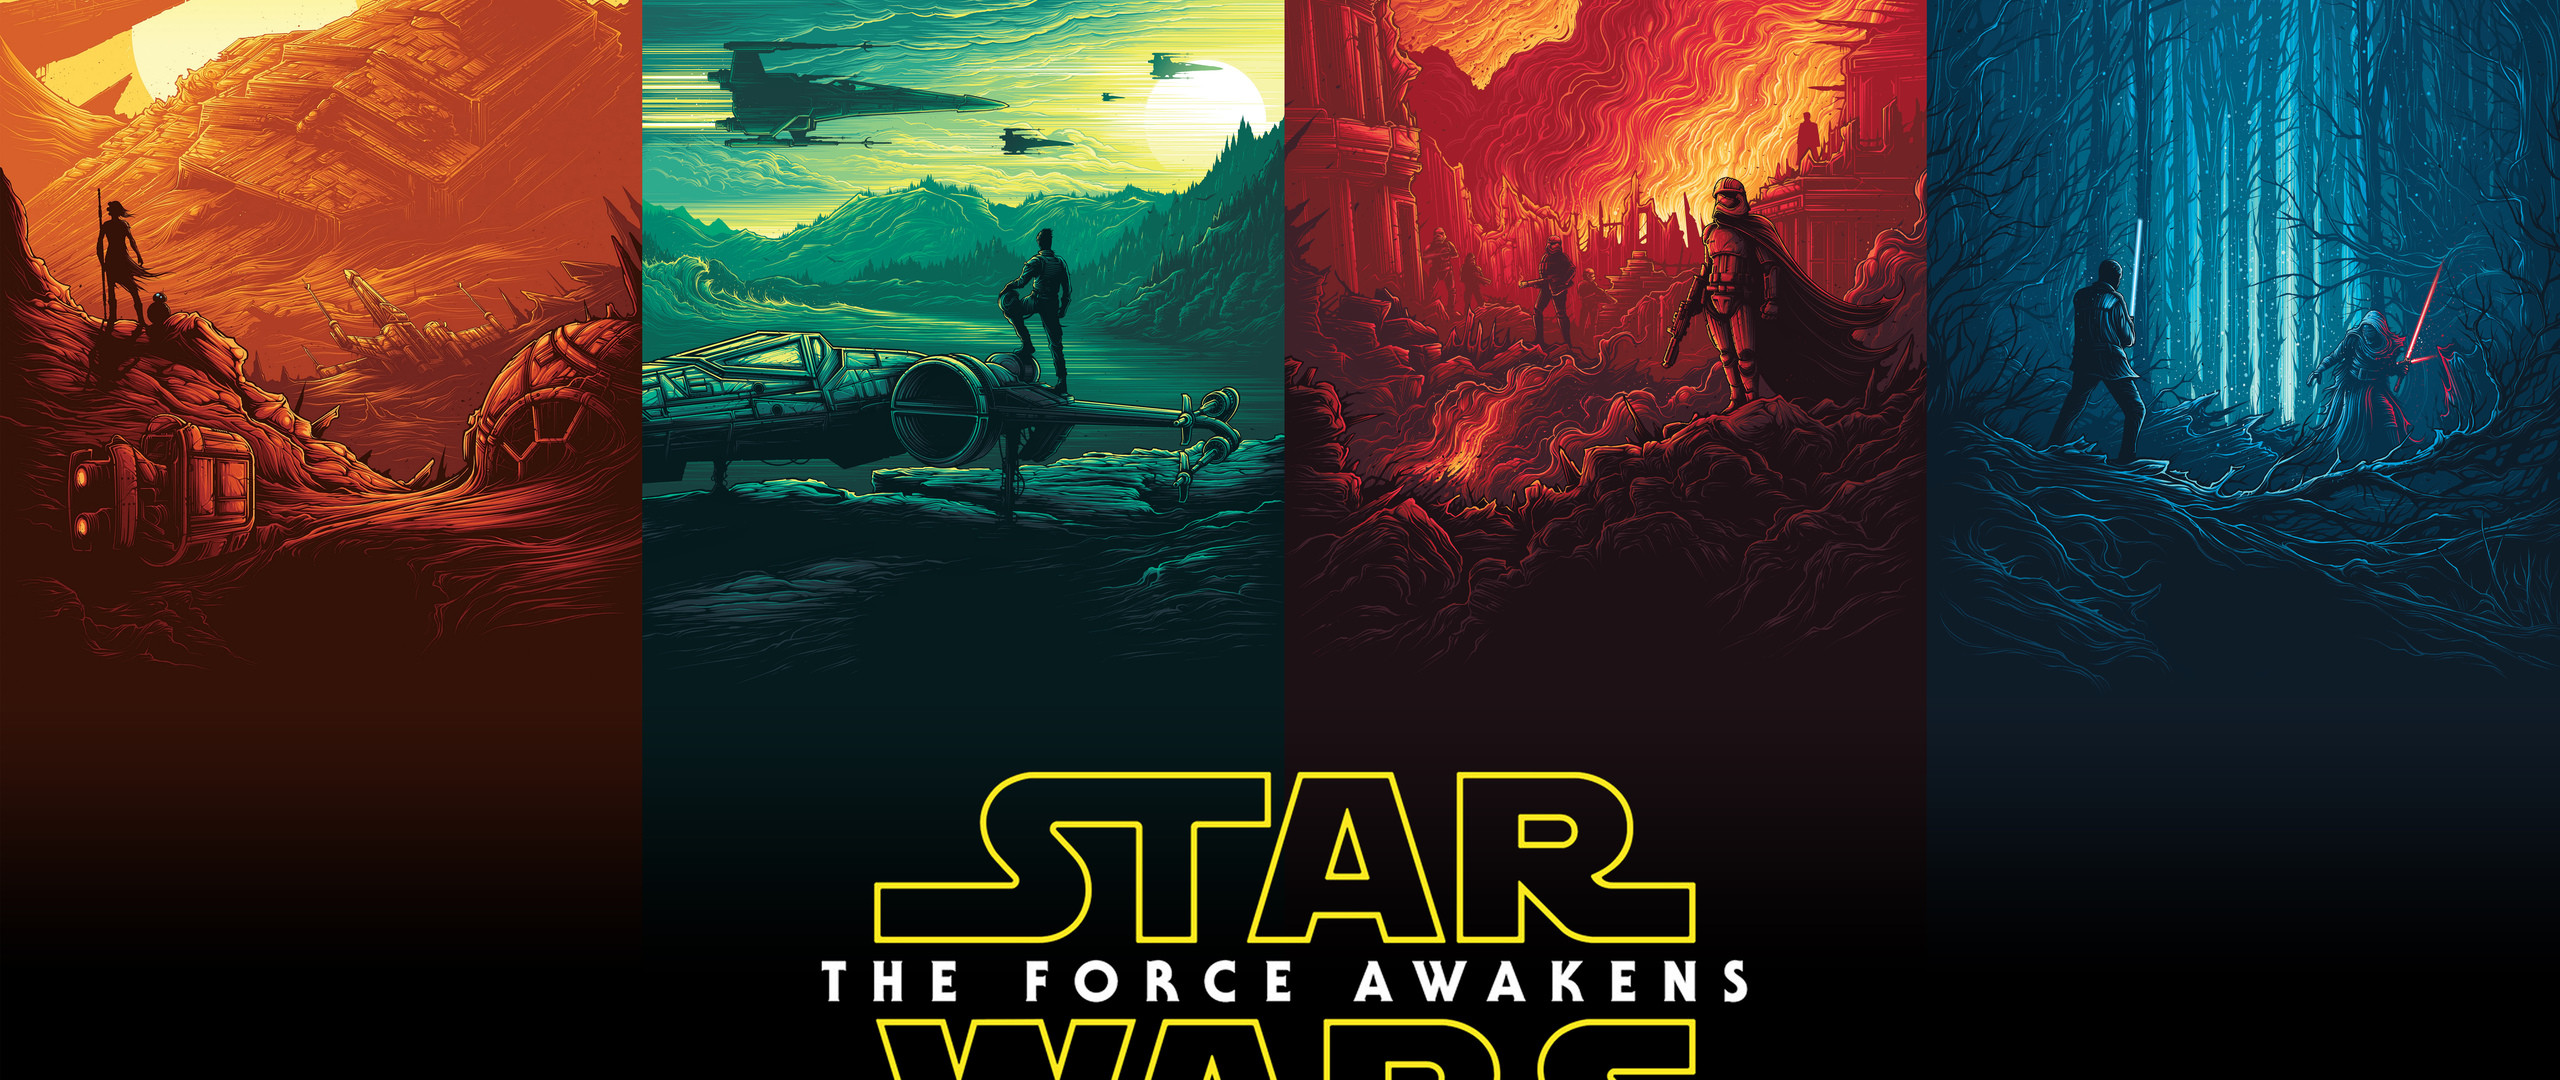 star-wars-poster-logo.jpg